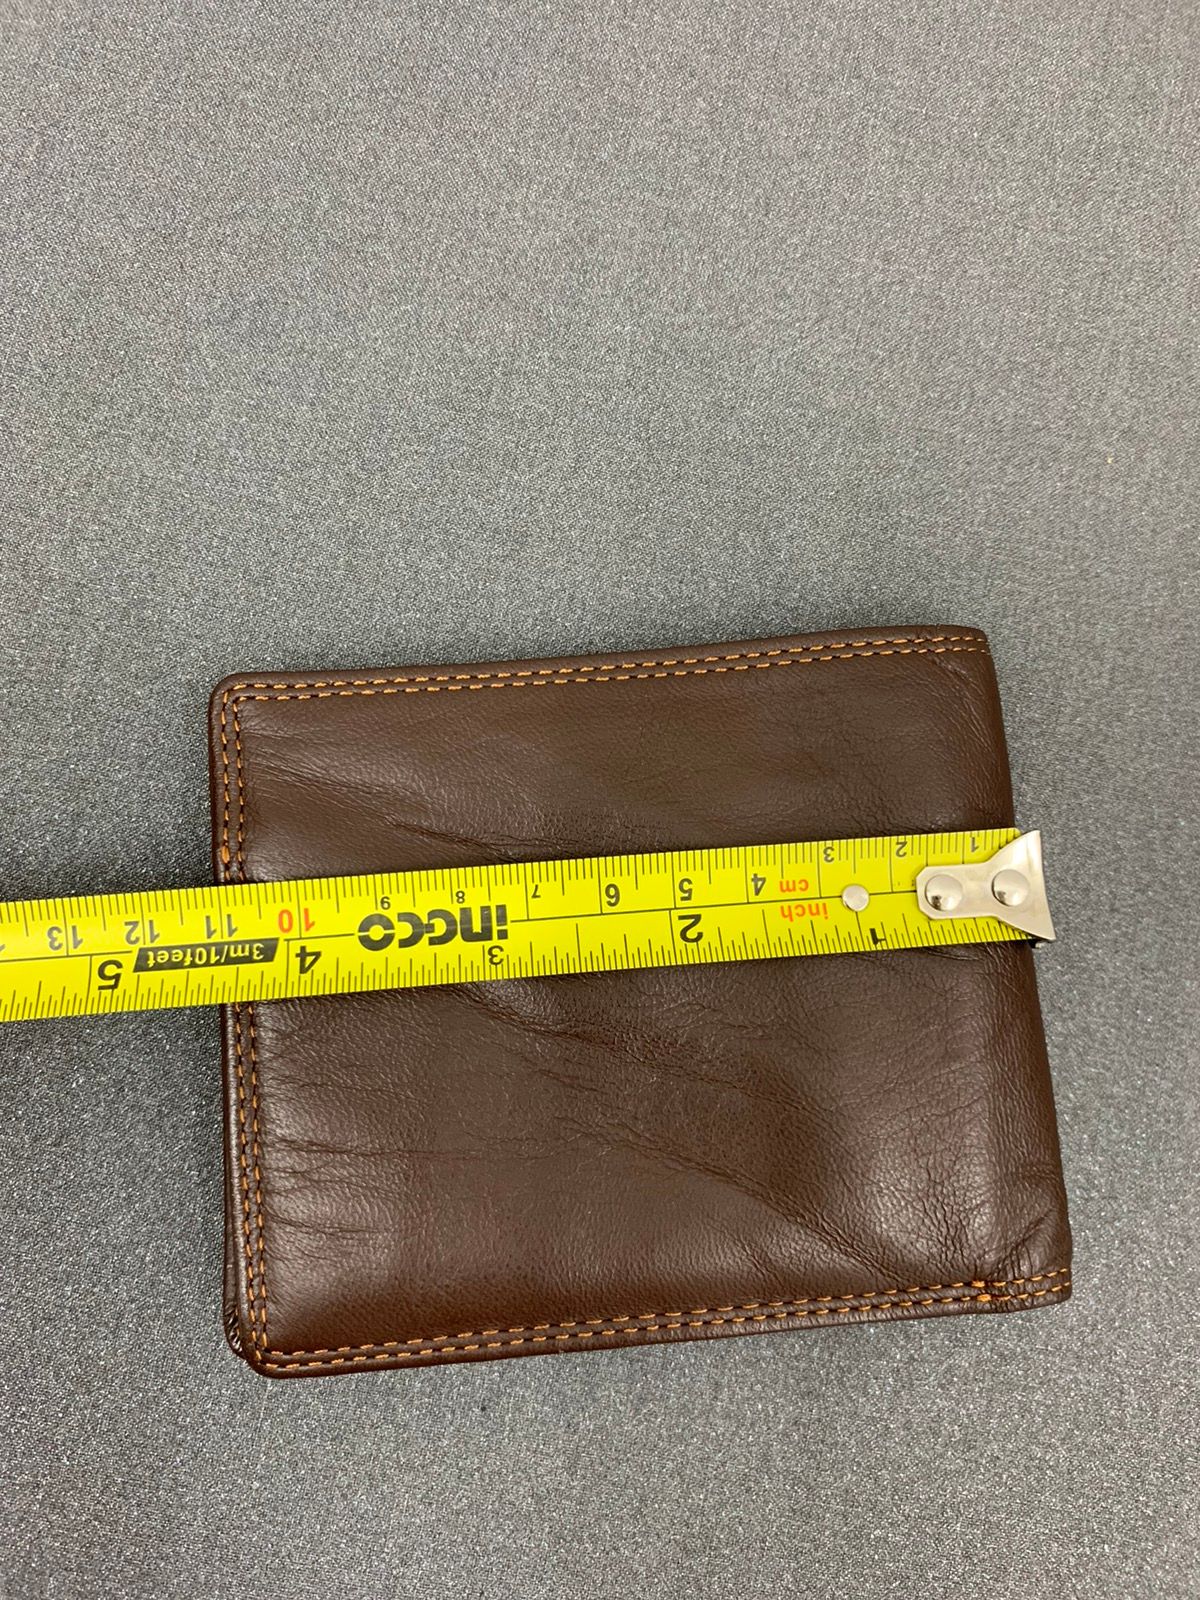 JapaneseBrand Kansai Yamamoto Leather Wallet - 6